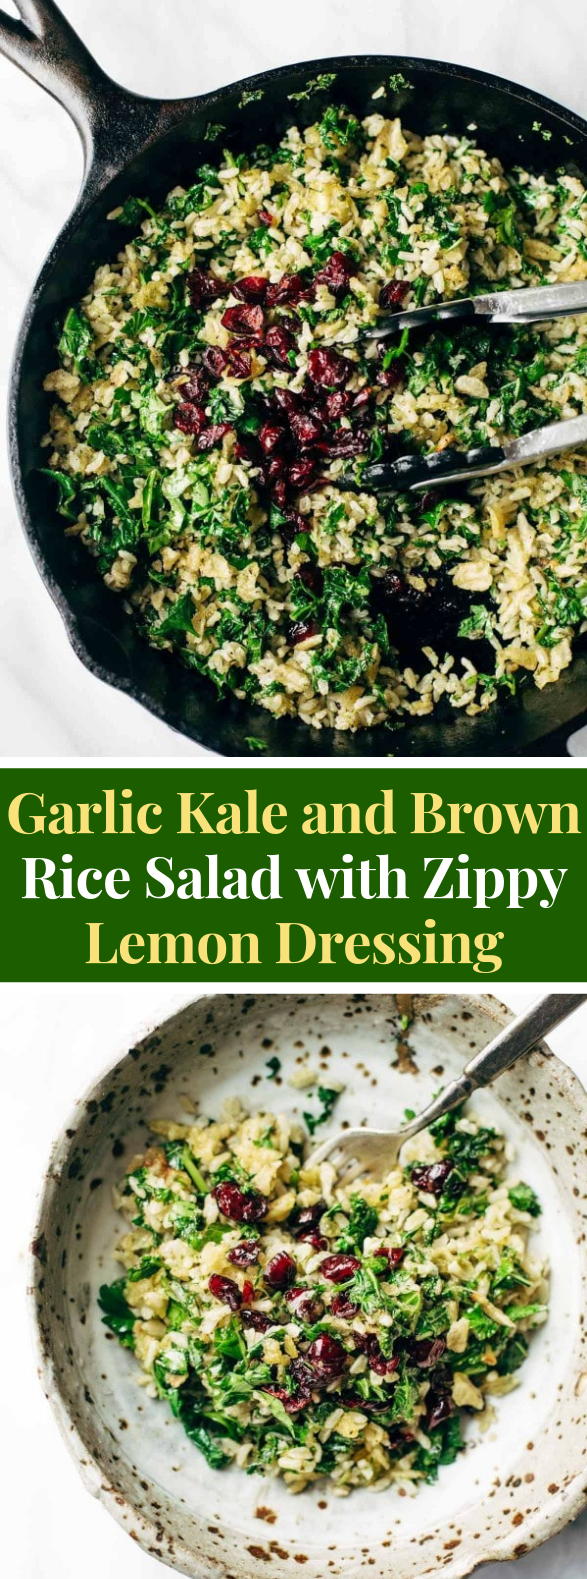 Garlic Kale and Brown Rice Salad with Zippy Lemon Dressing #vegetarian #healthysalads